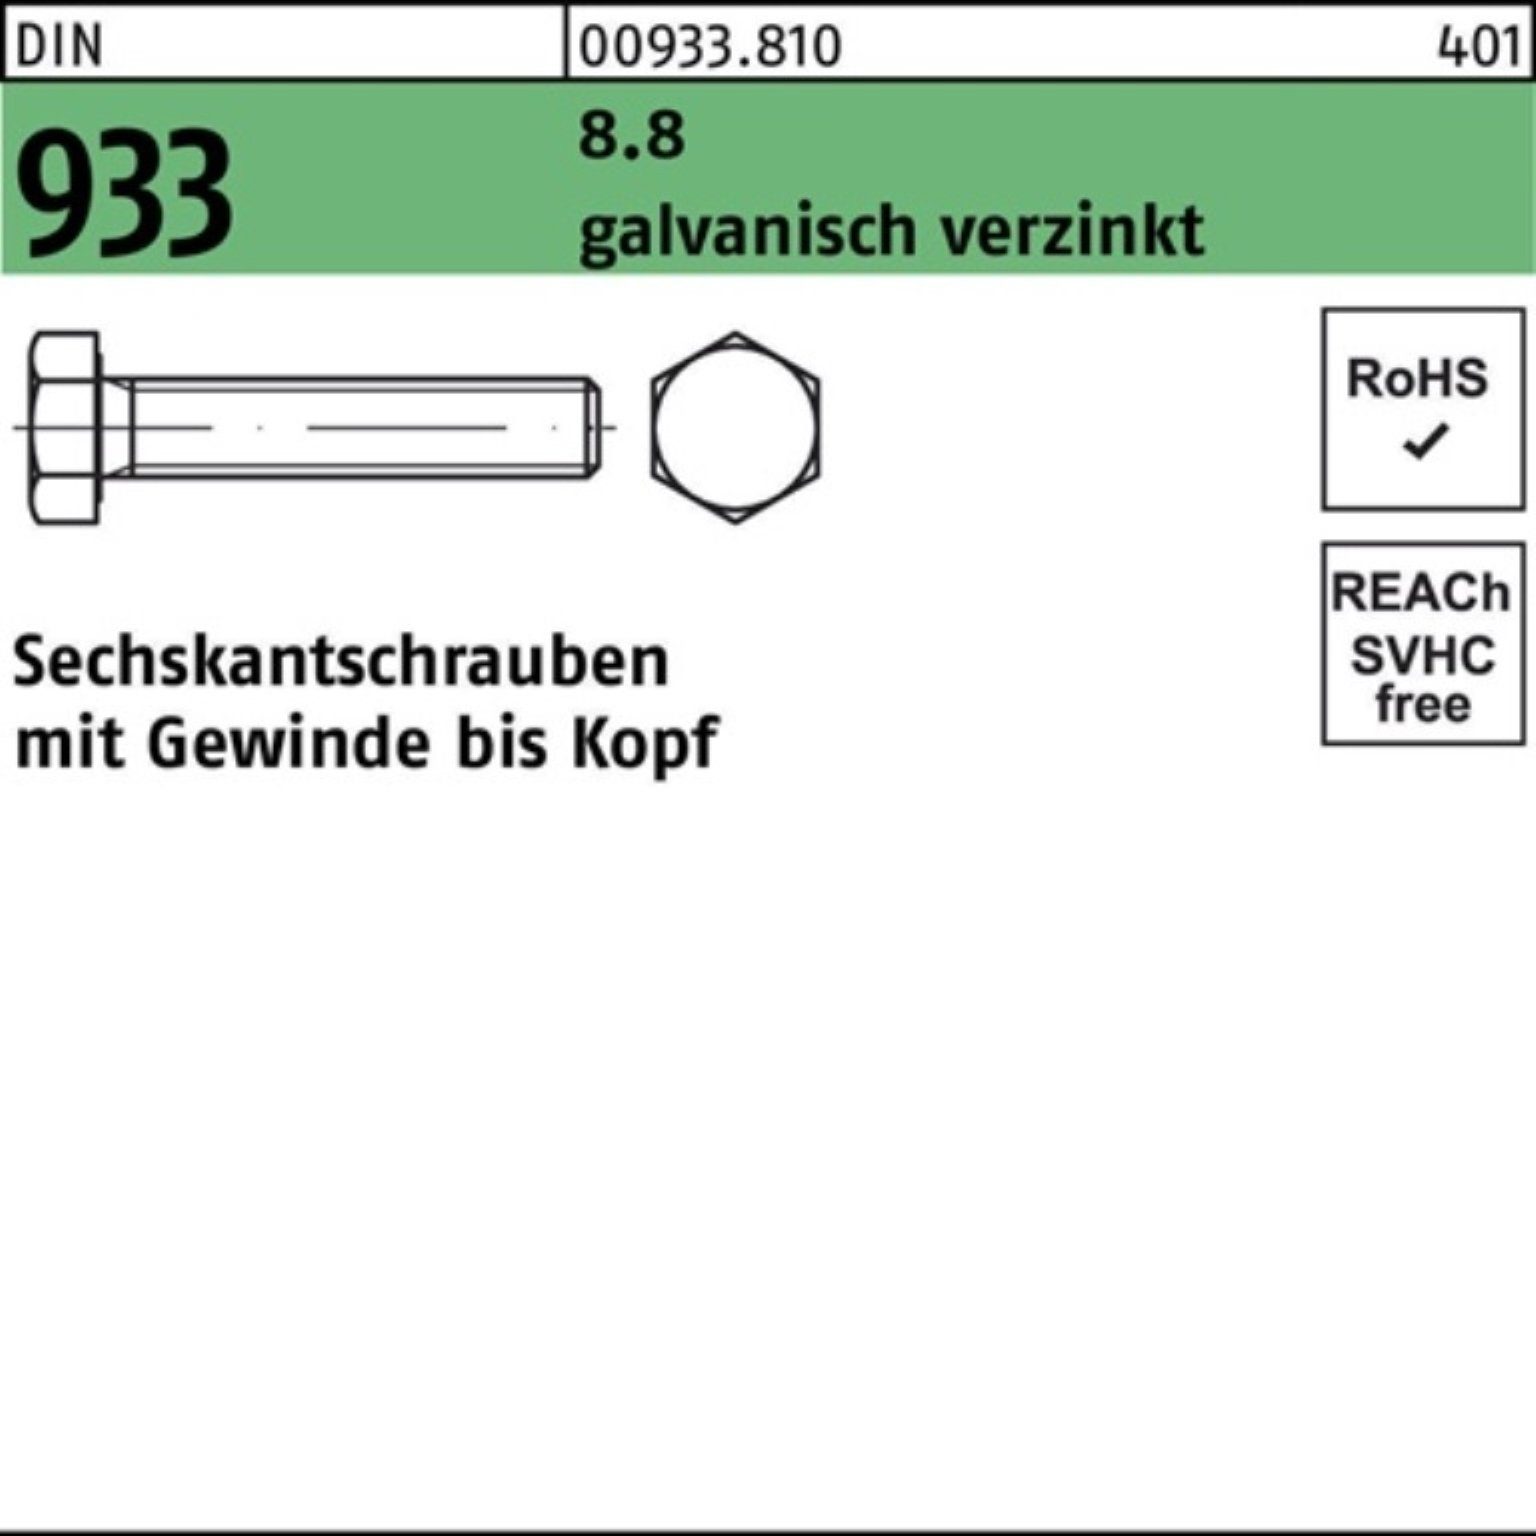 DIN 100er M16x 933 VG Sechskantschraube 50 Sechskantschraube Stü galv.verz. Pack 8.8 Reyher 75